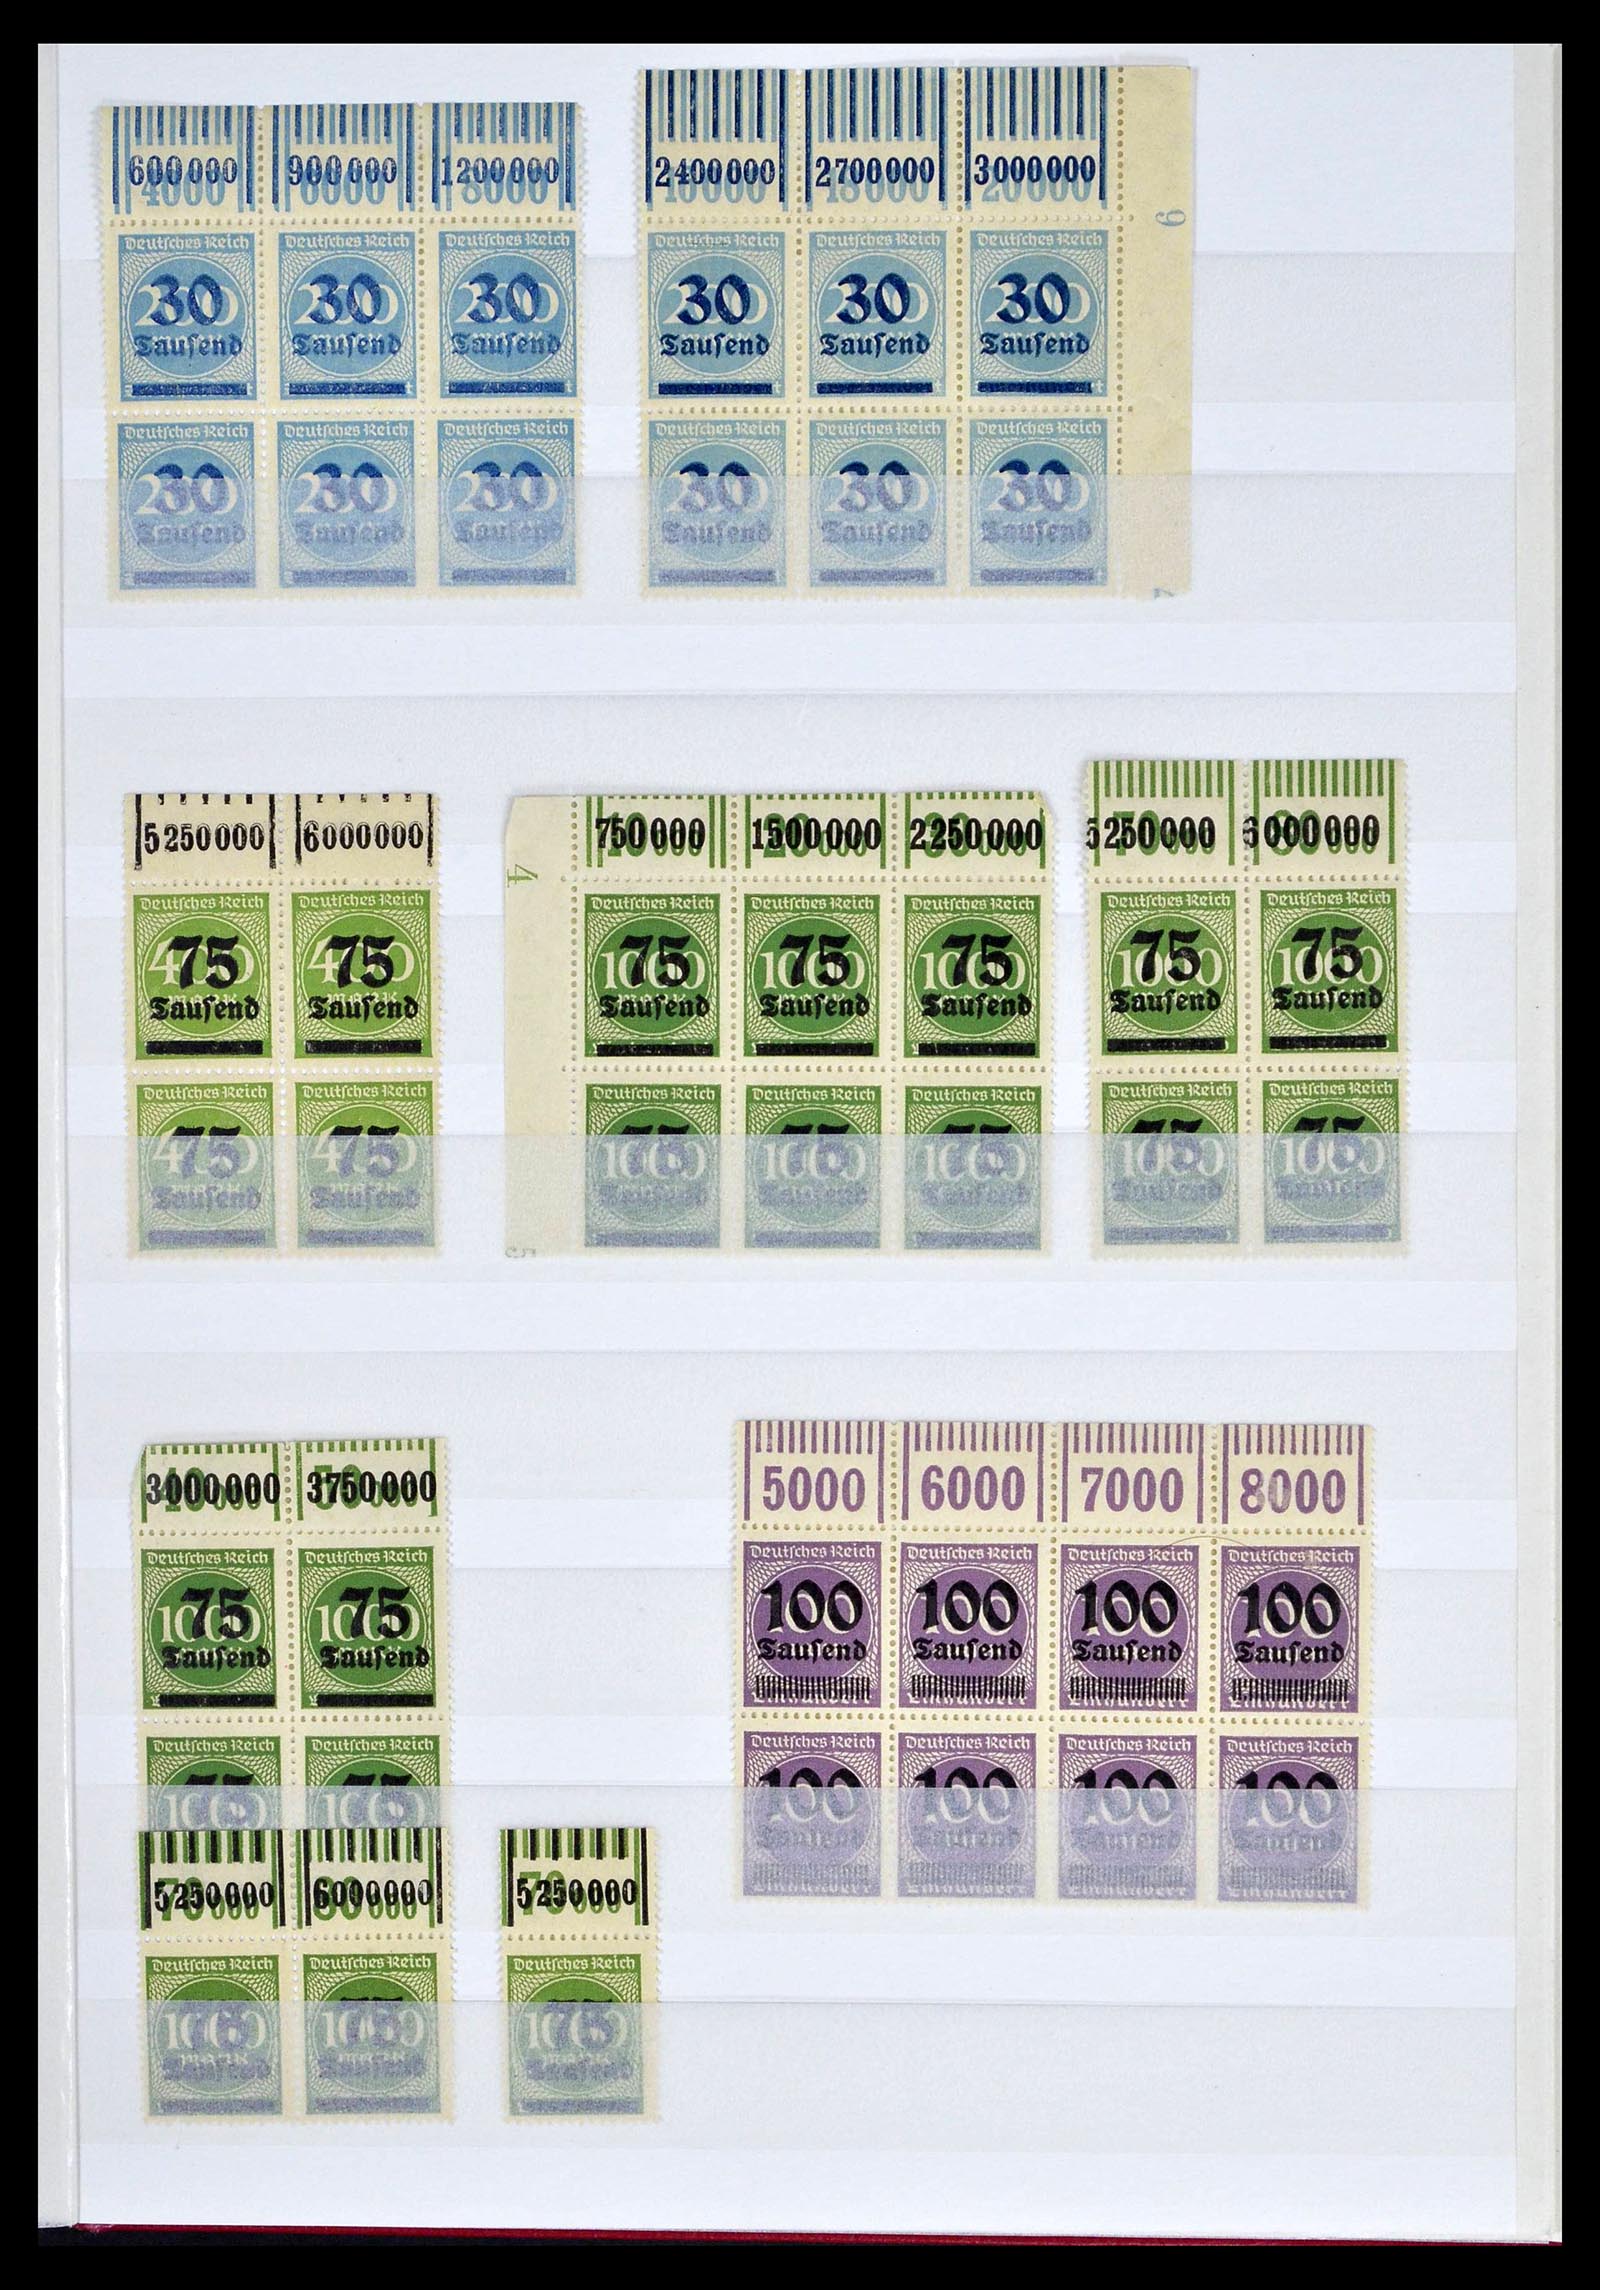 39254 0047 - Stamp collection 39254 German Reich MNH top margins.